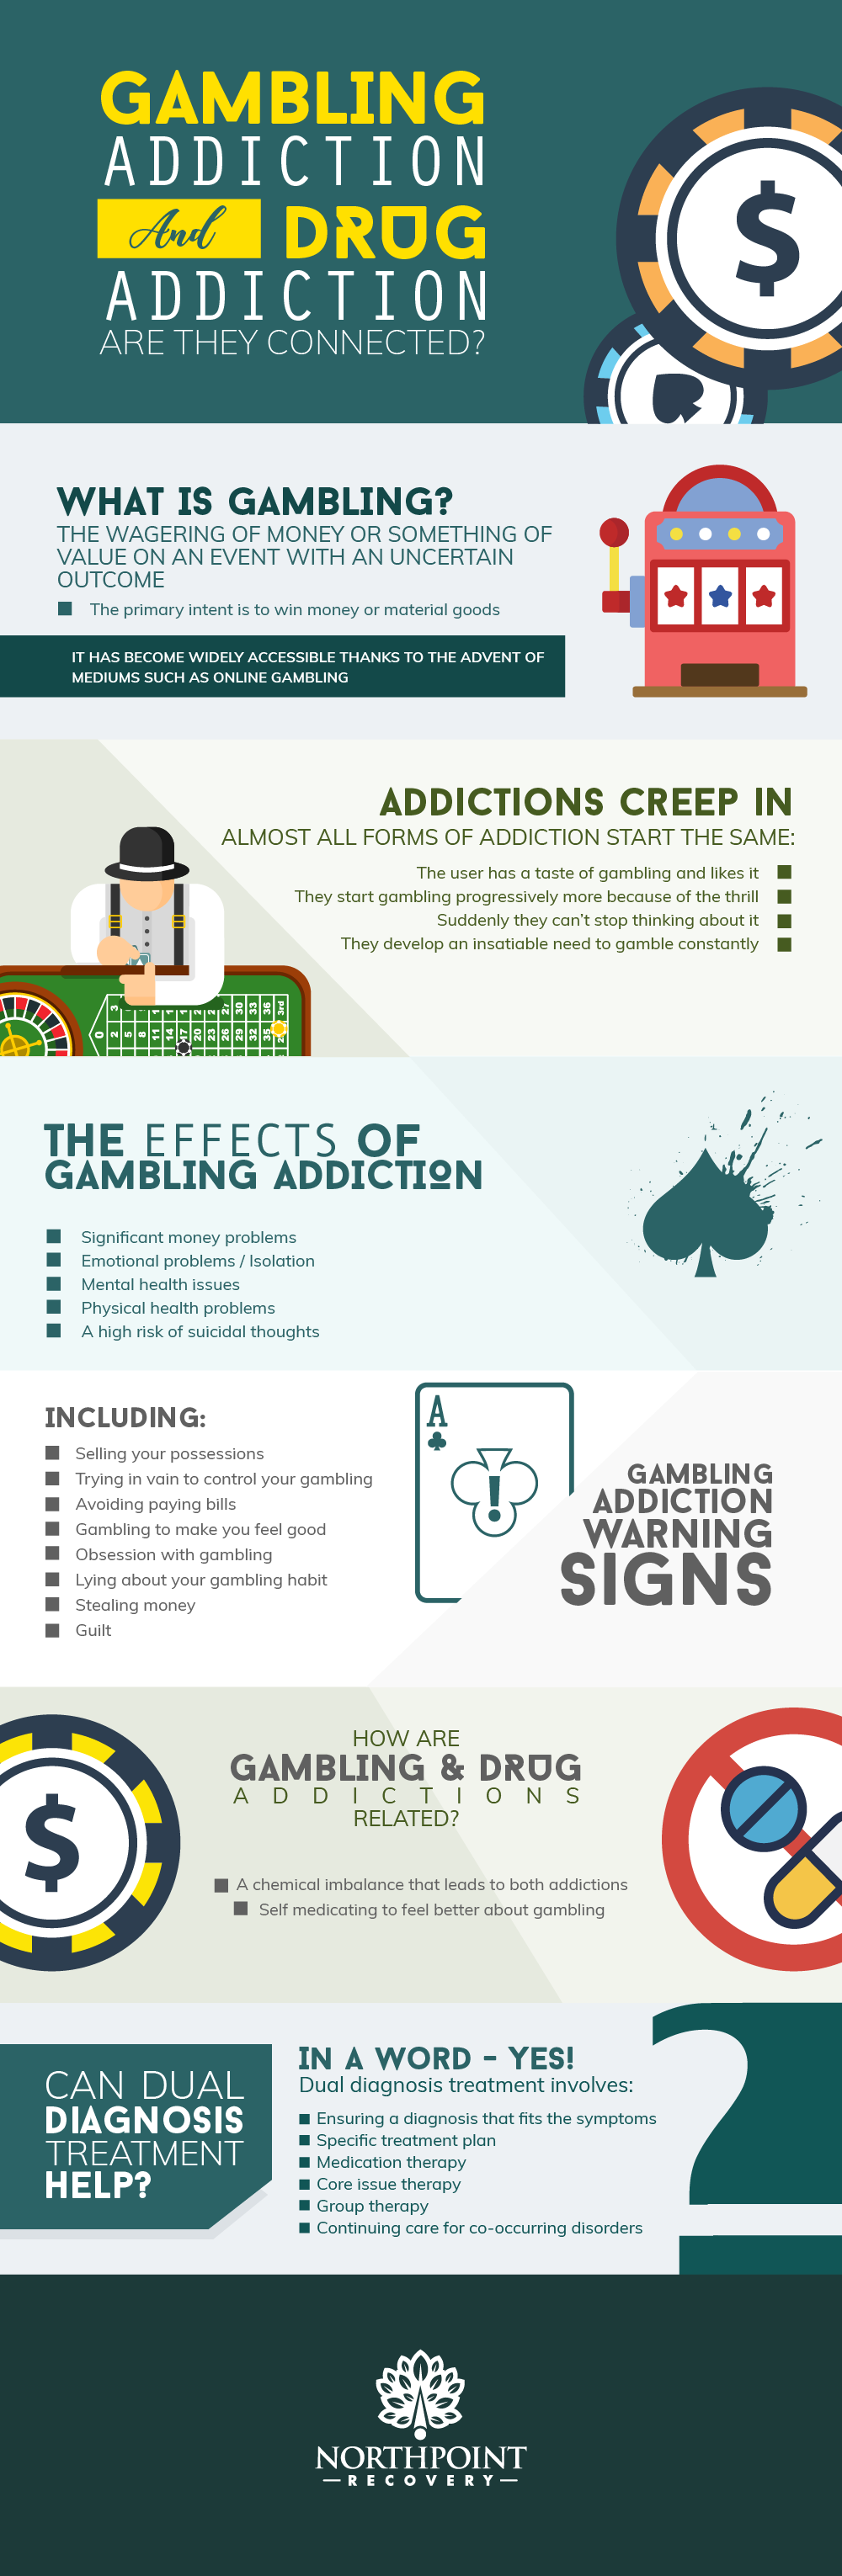 Gambling Addiction and Drug Addiction